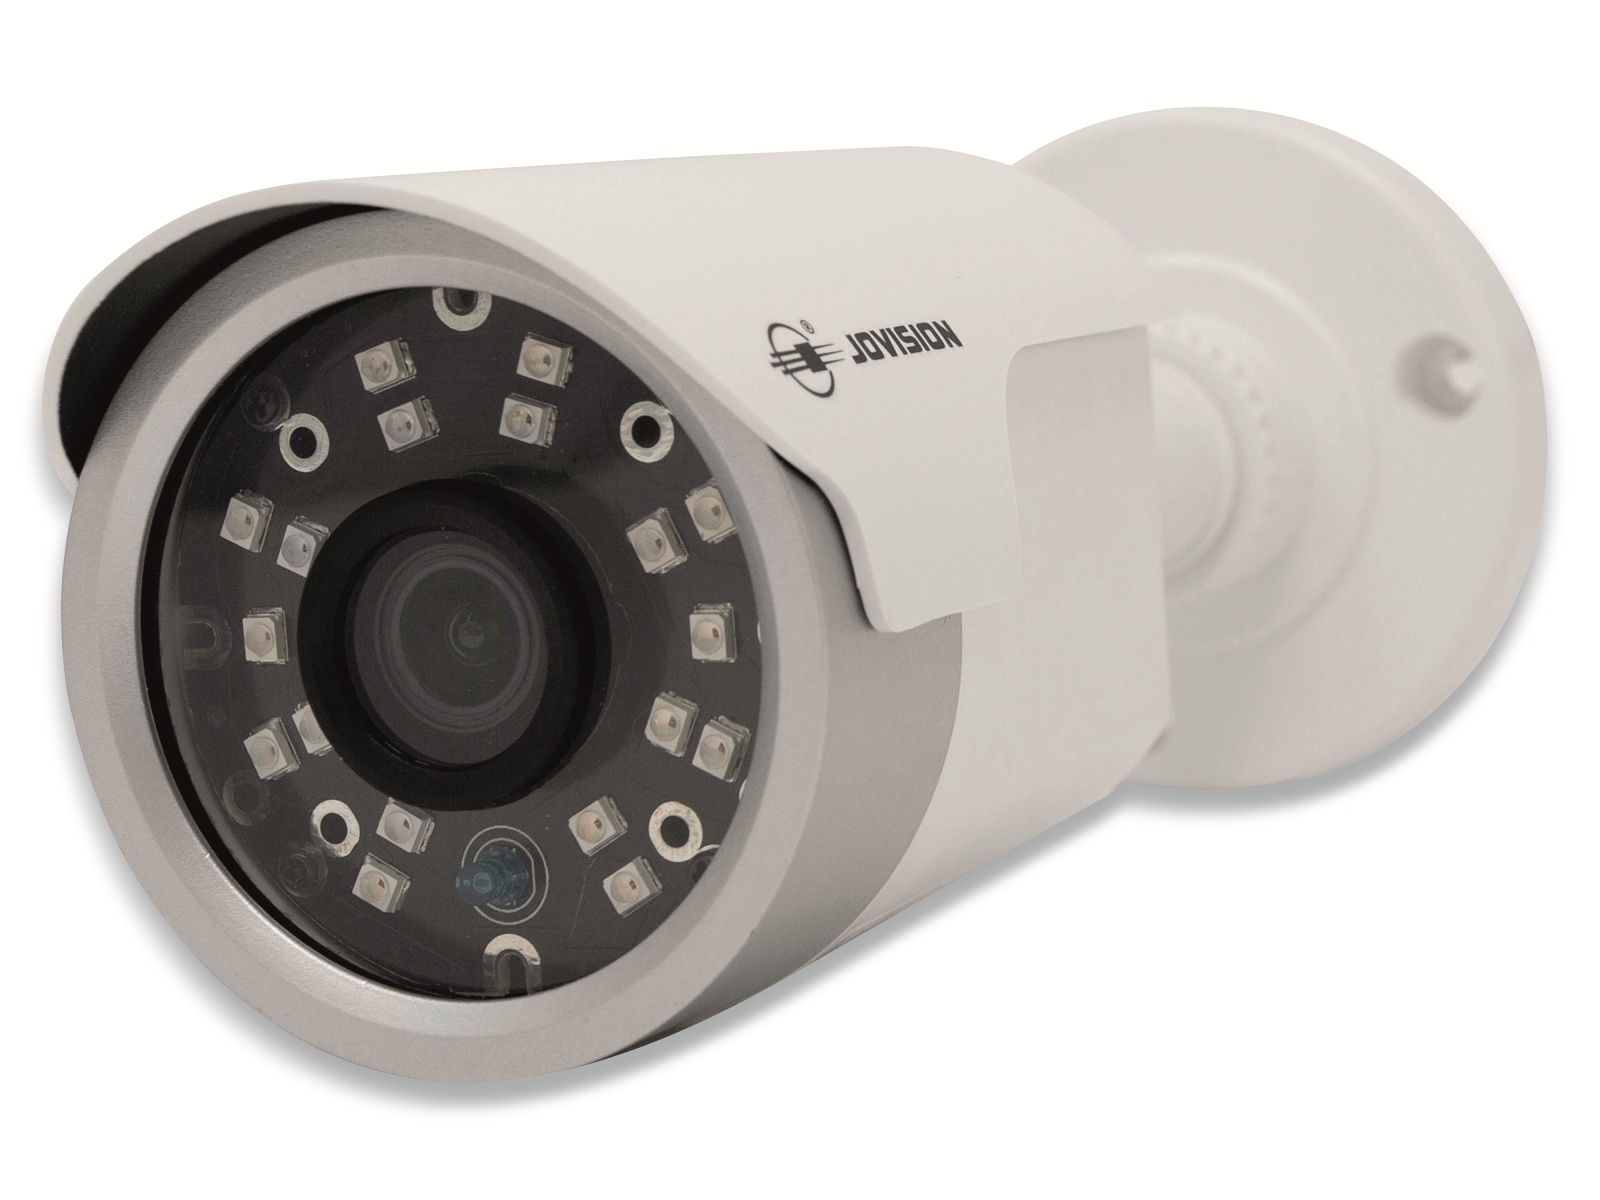 Jovision Überwachungskamera CloudSEE IP-B20, 2 MP, FullHD